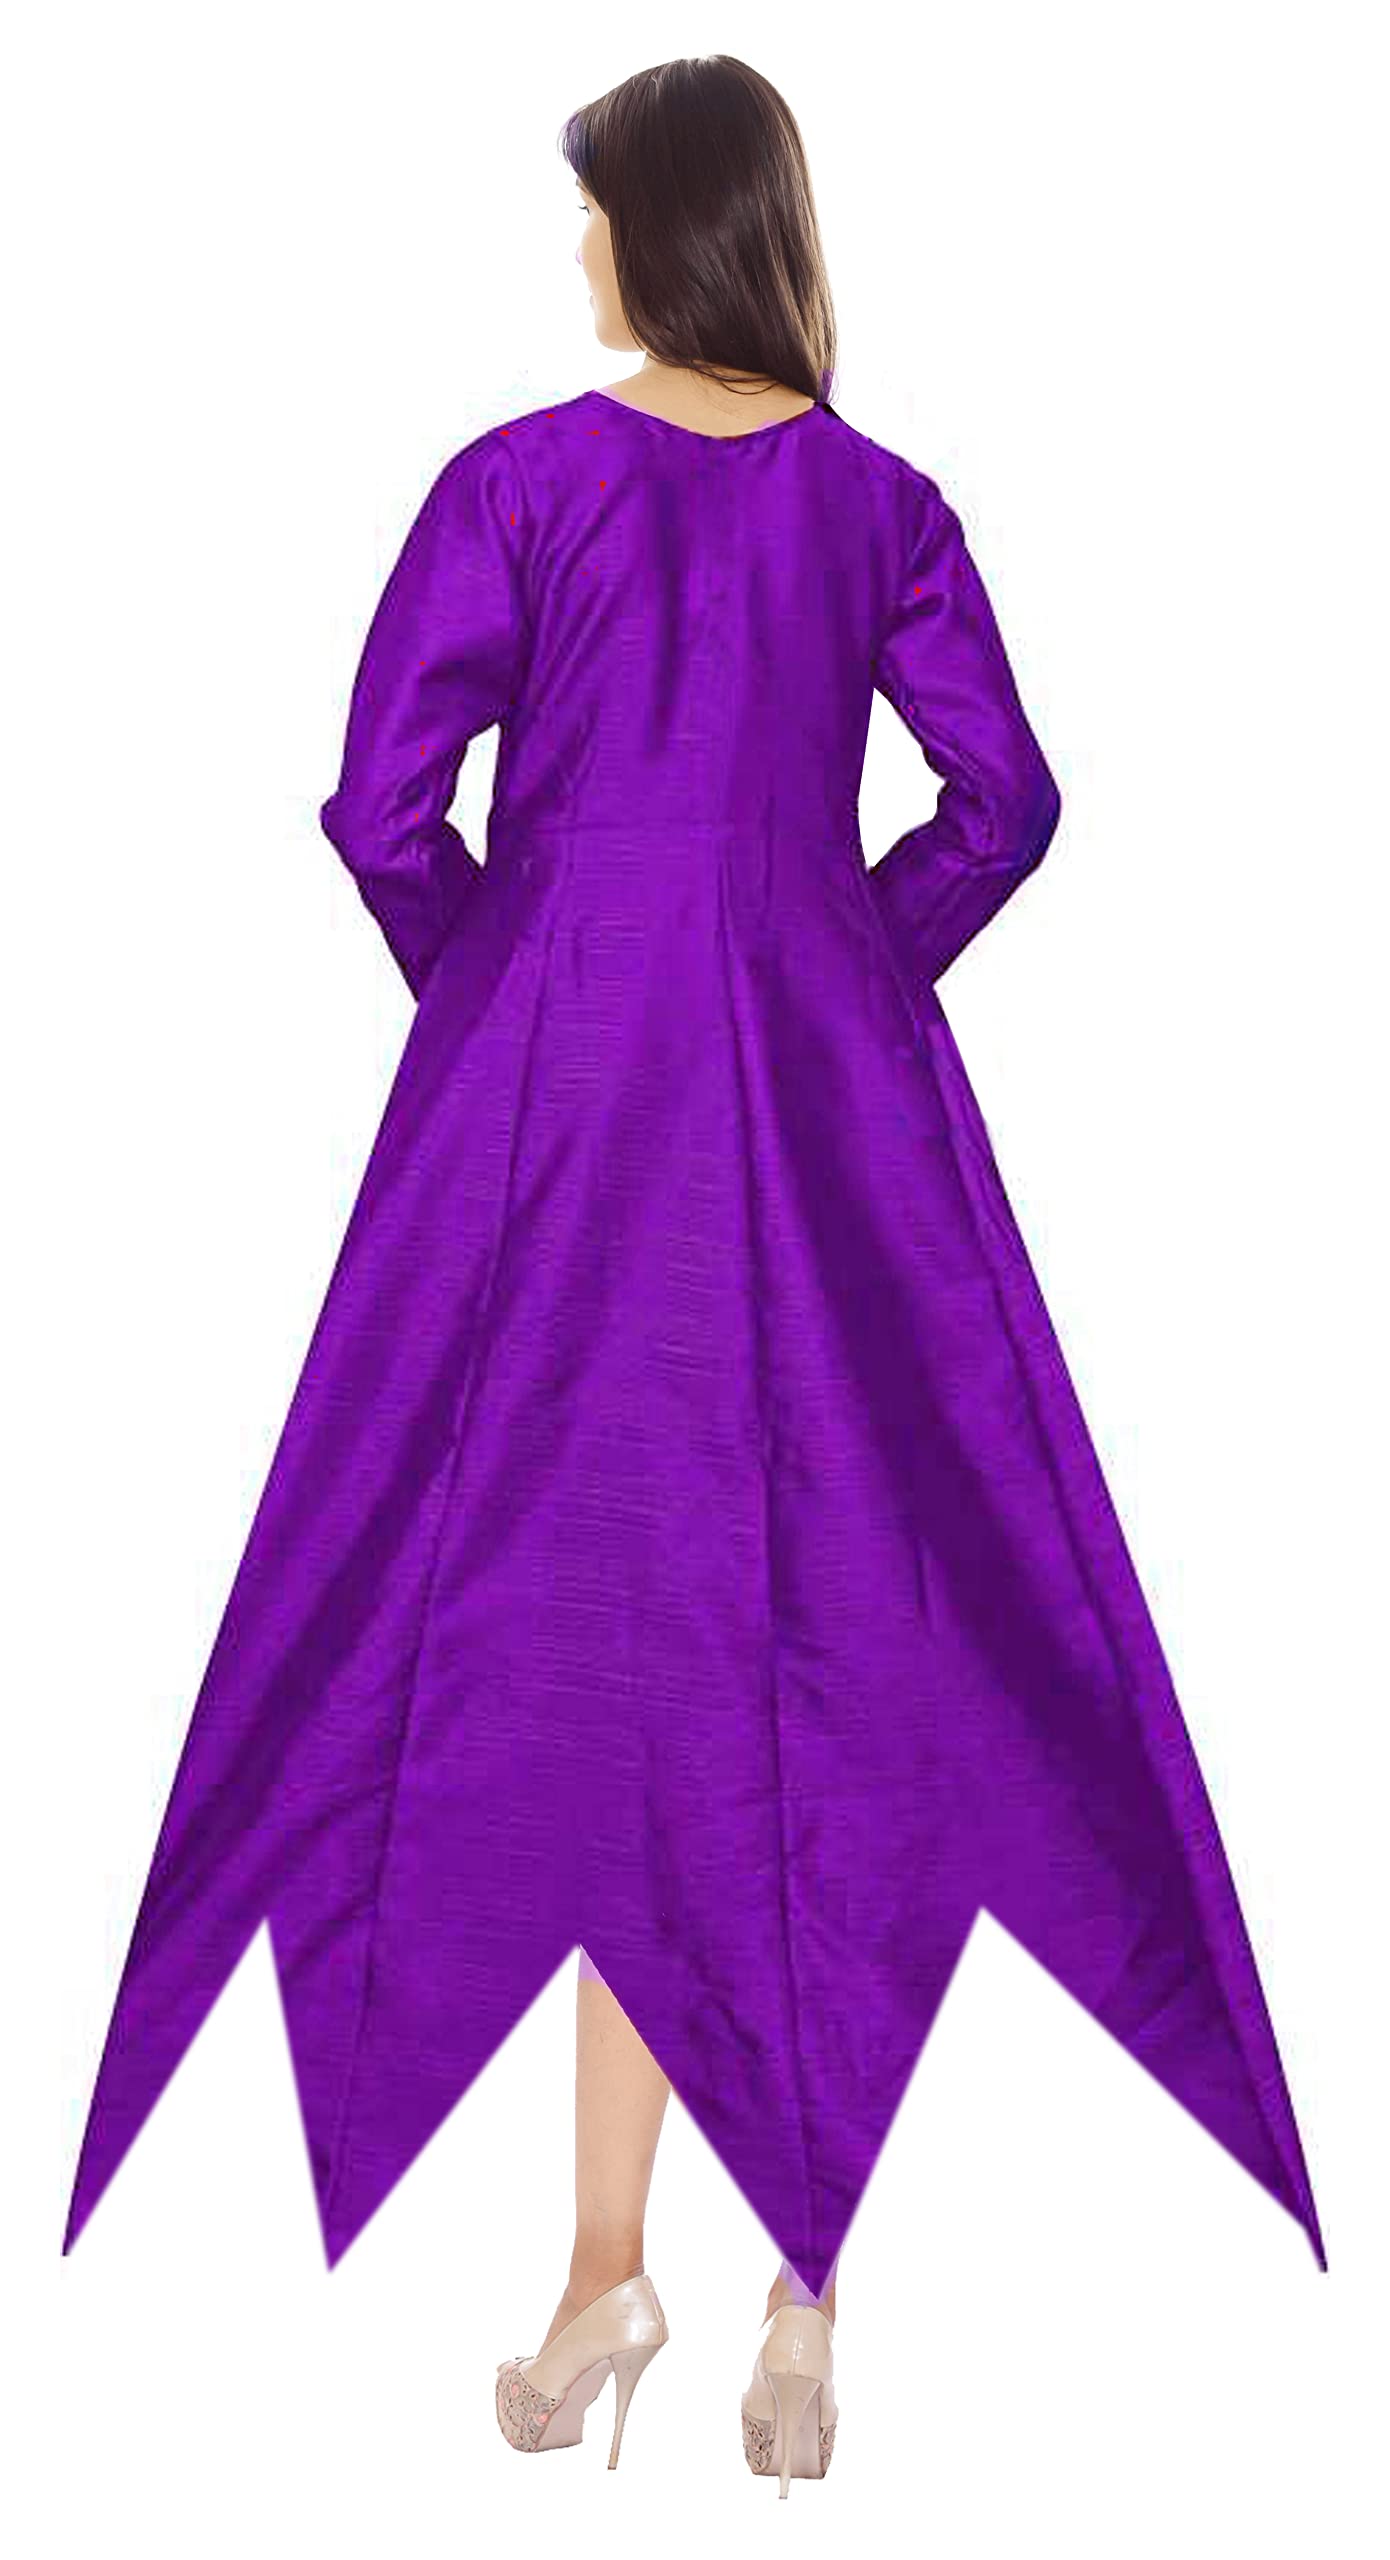 Lakkar haveli Beautiful Women's Tunic Art Dupien Poly Silk Handkerchief Dress Top Casual Frock Suit Purple Color Wedding Wear Plus Size (Medium)